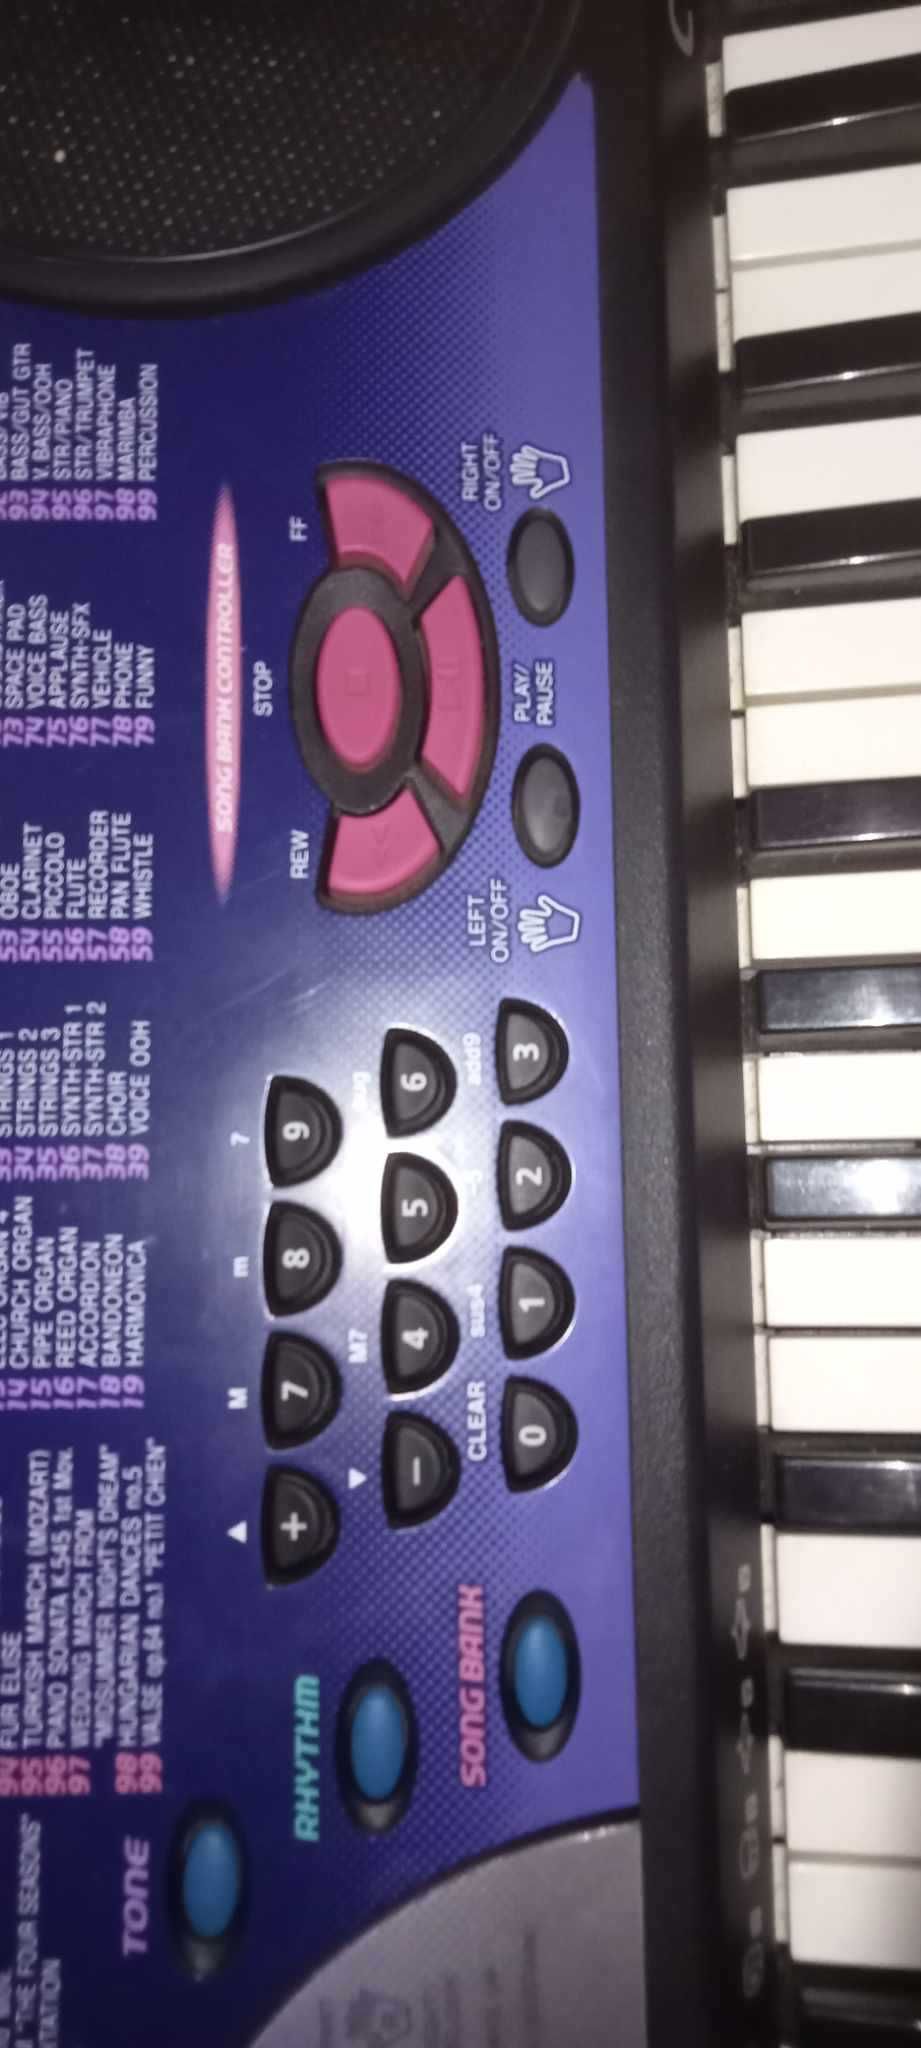 Keyboard Casio CTK-451